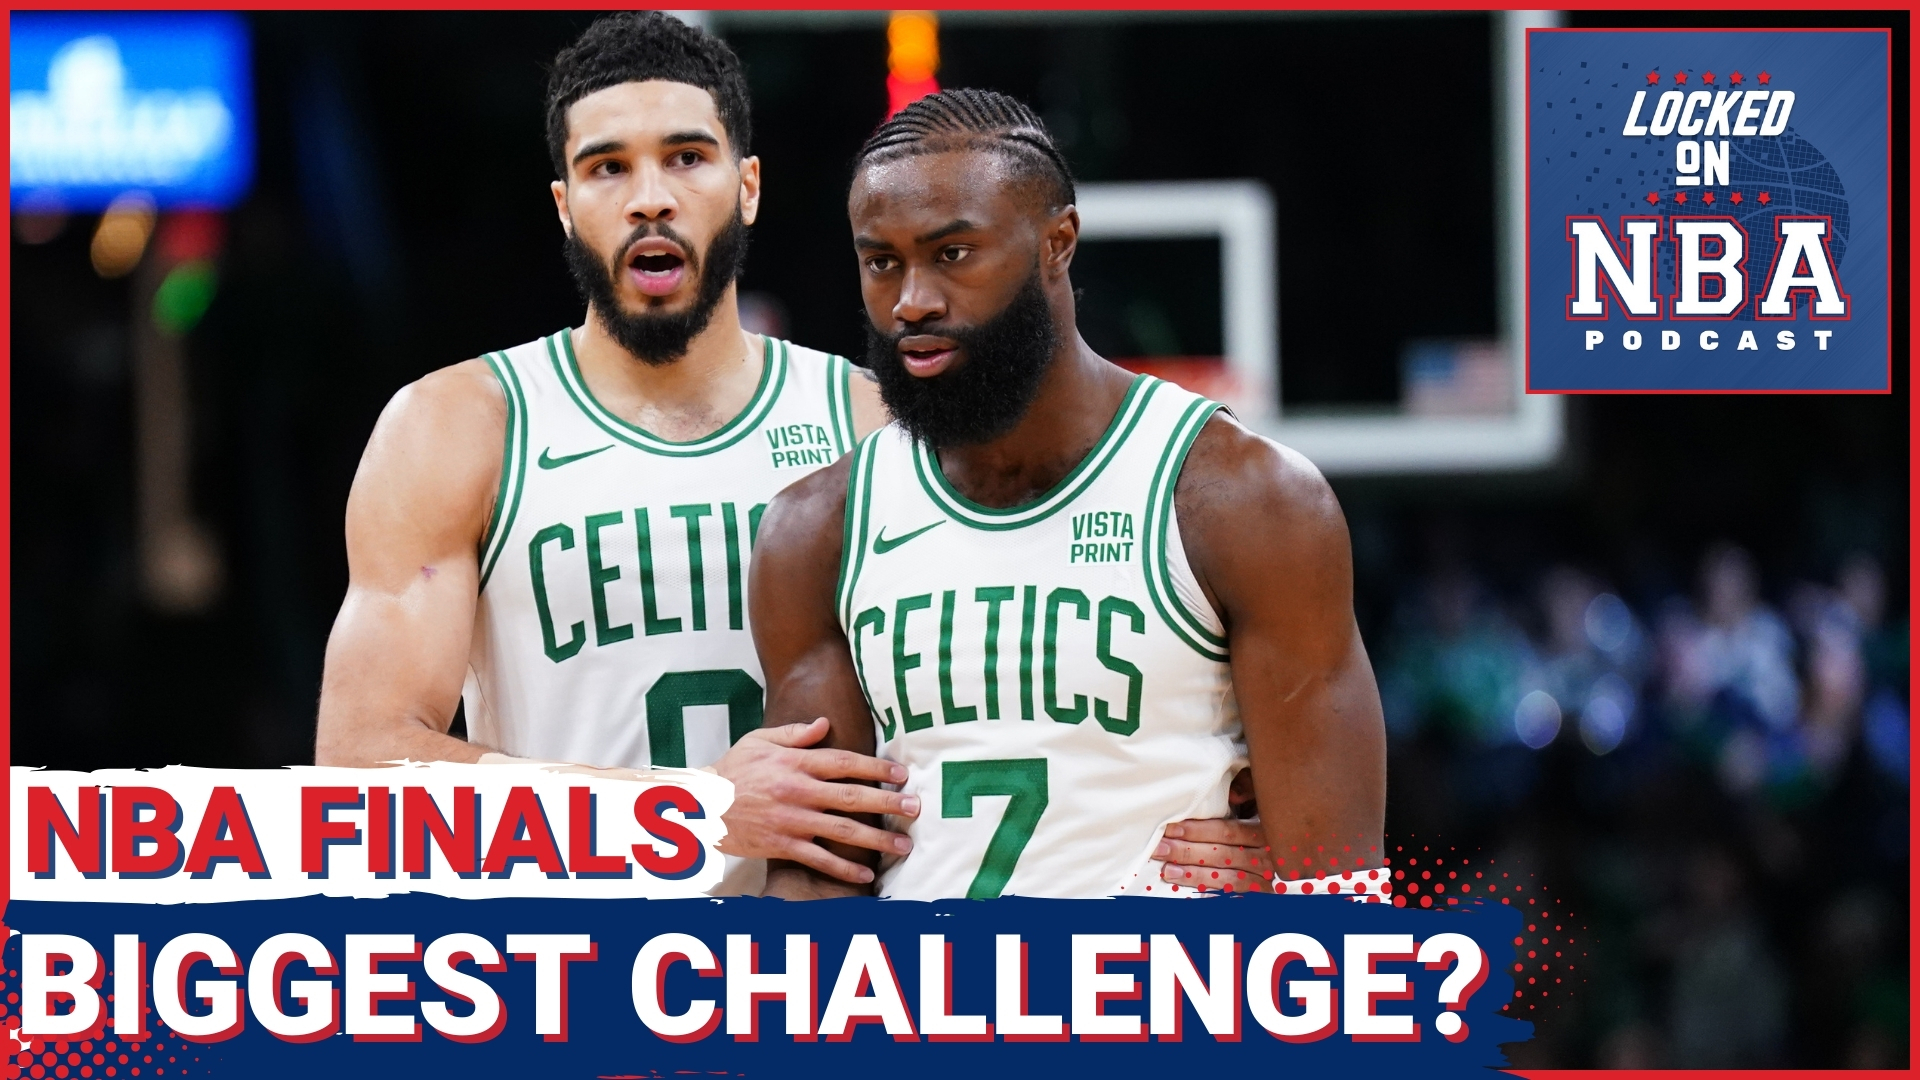 Mavericks & Celtics NBA Finals Previews: Key Players, Matchups, Storylines & More + Why Cavs Fired Bickerstaff & Donovan Mitchell's Future